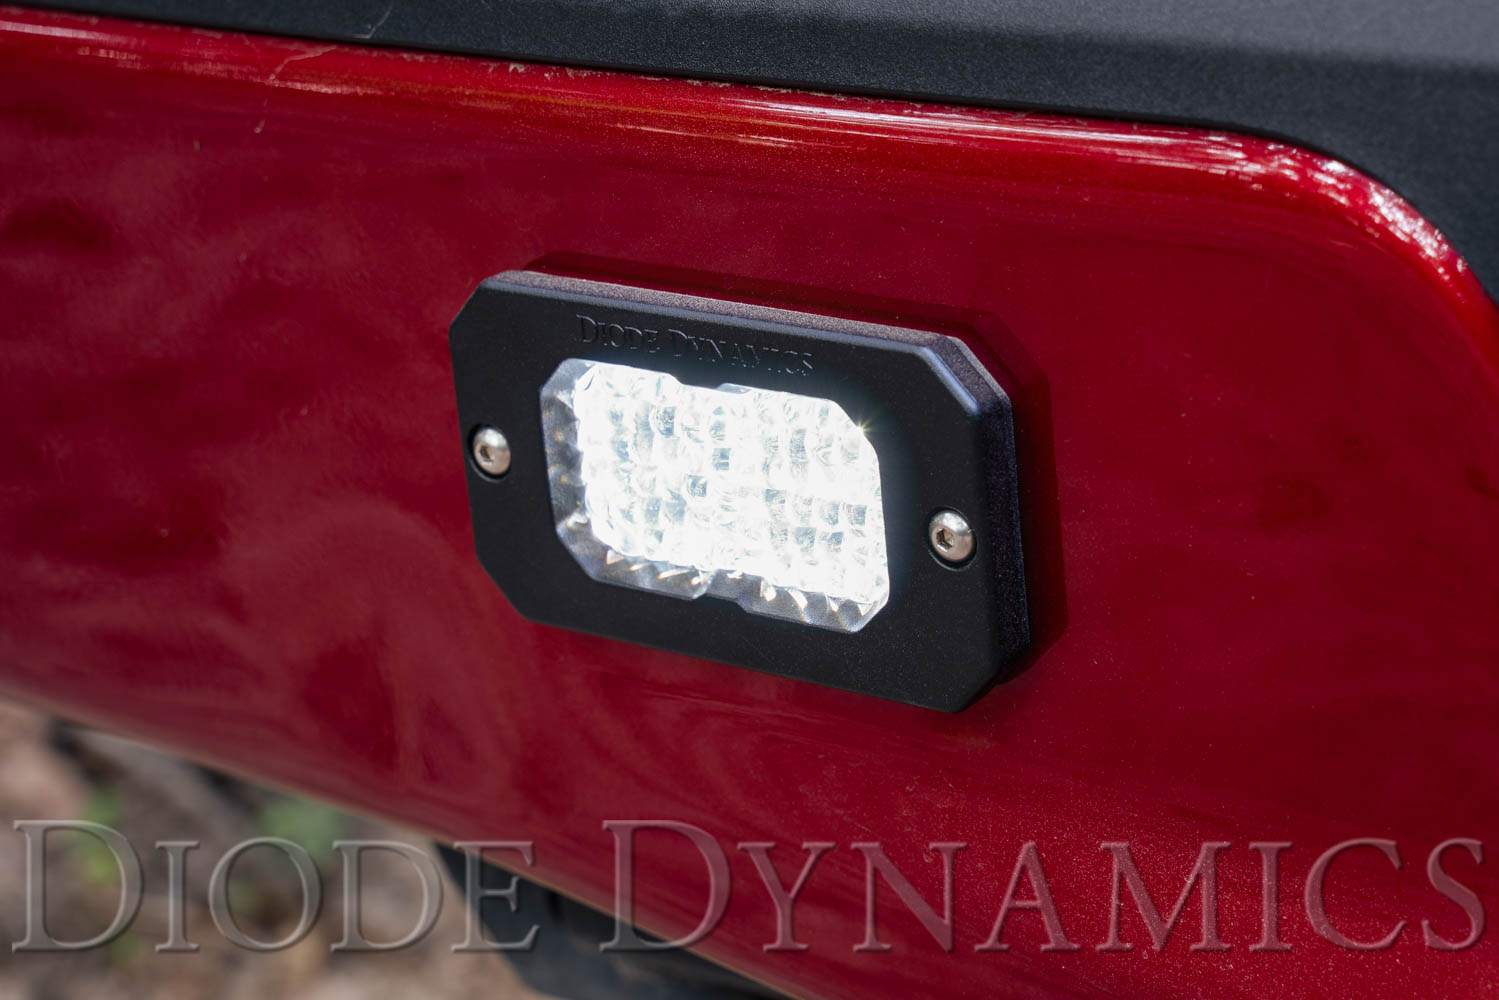 Diode Dynamics Stage Series 2 Inch LED Pod, Sport White Fog Flush ABL Each